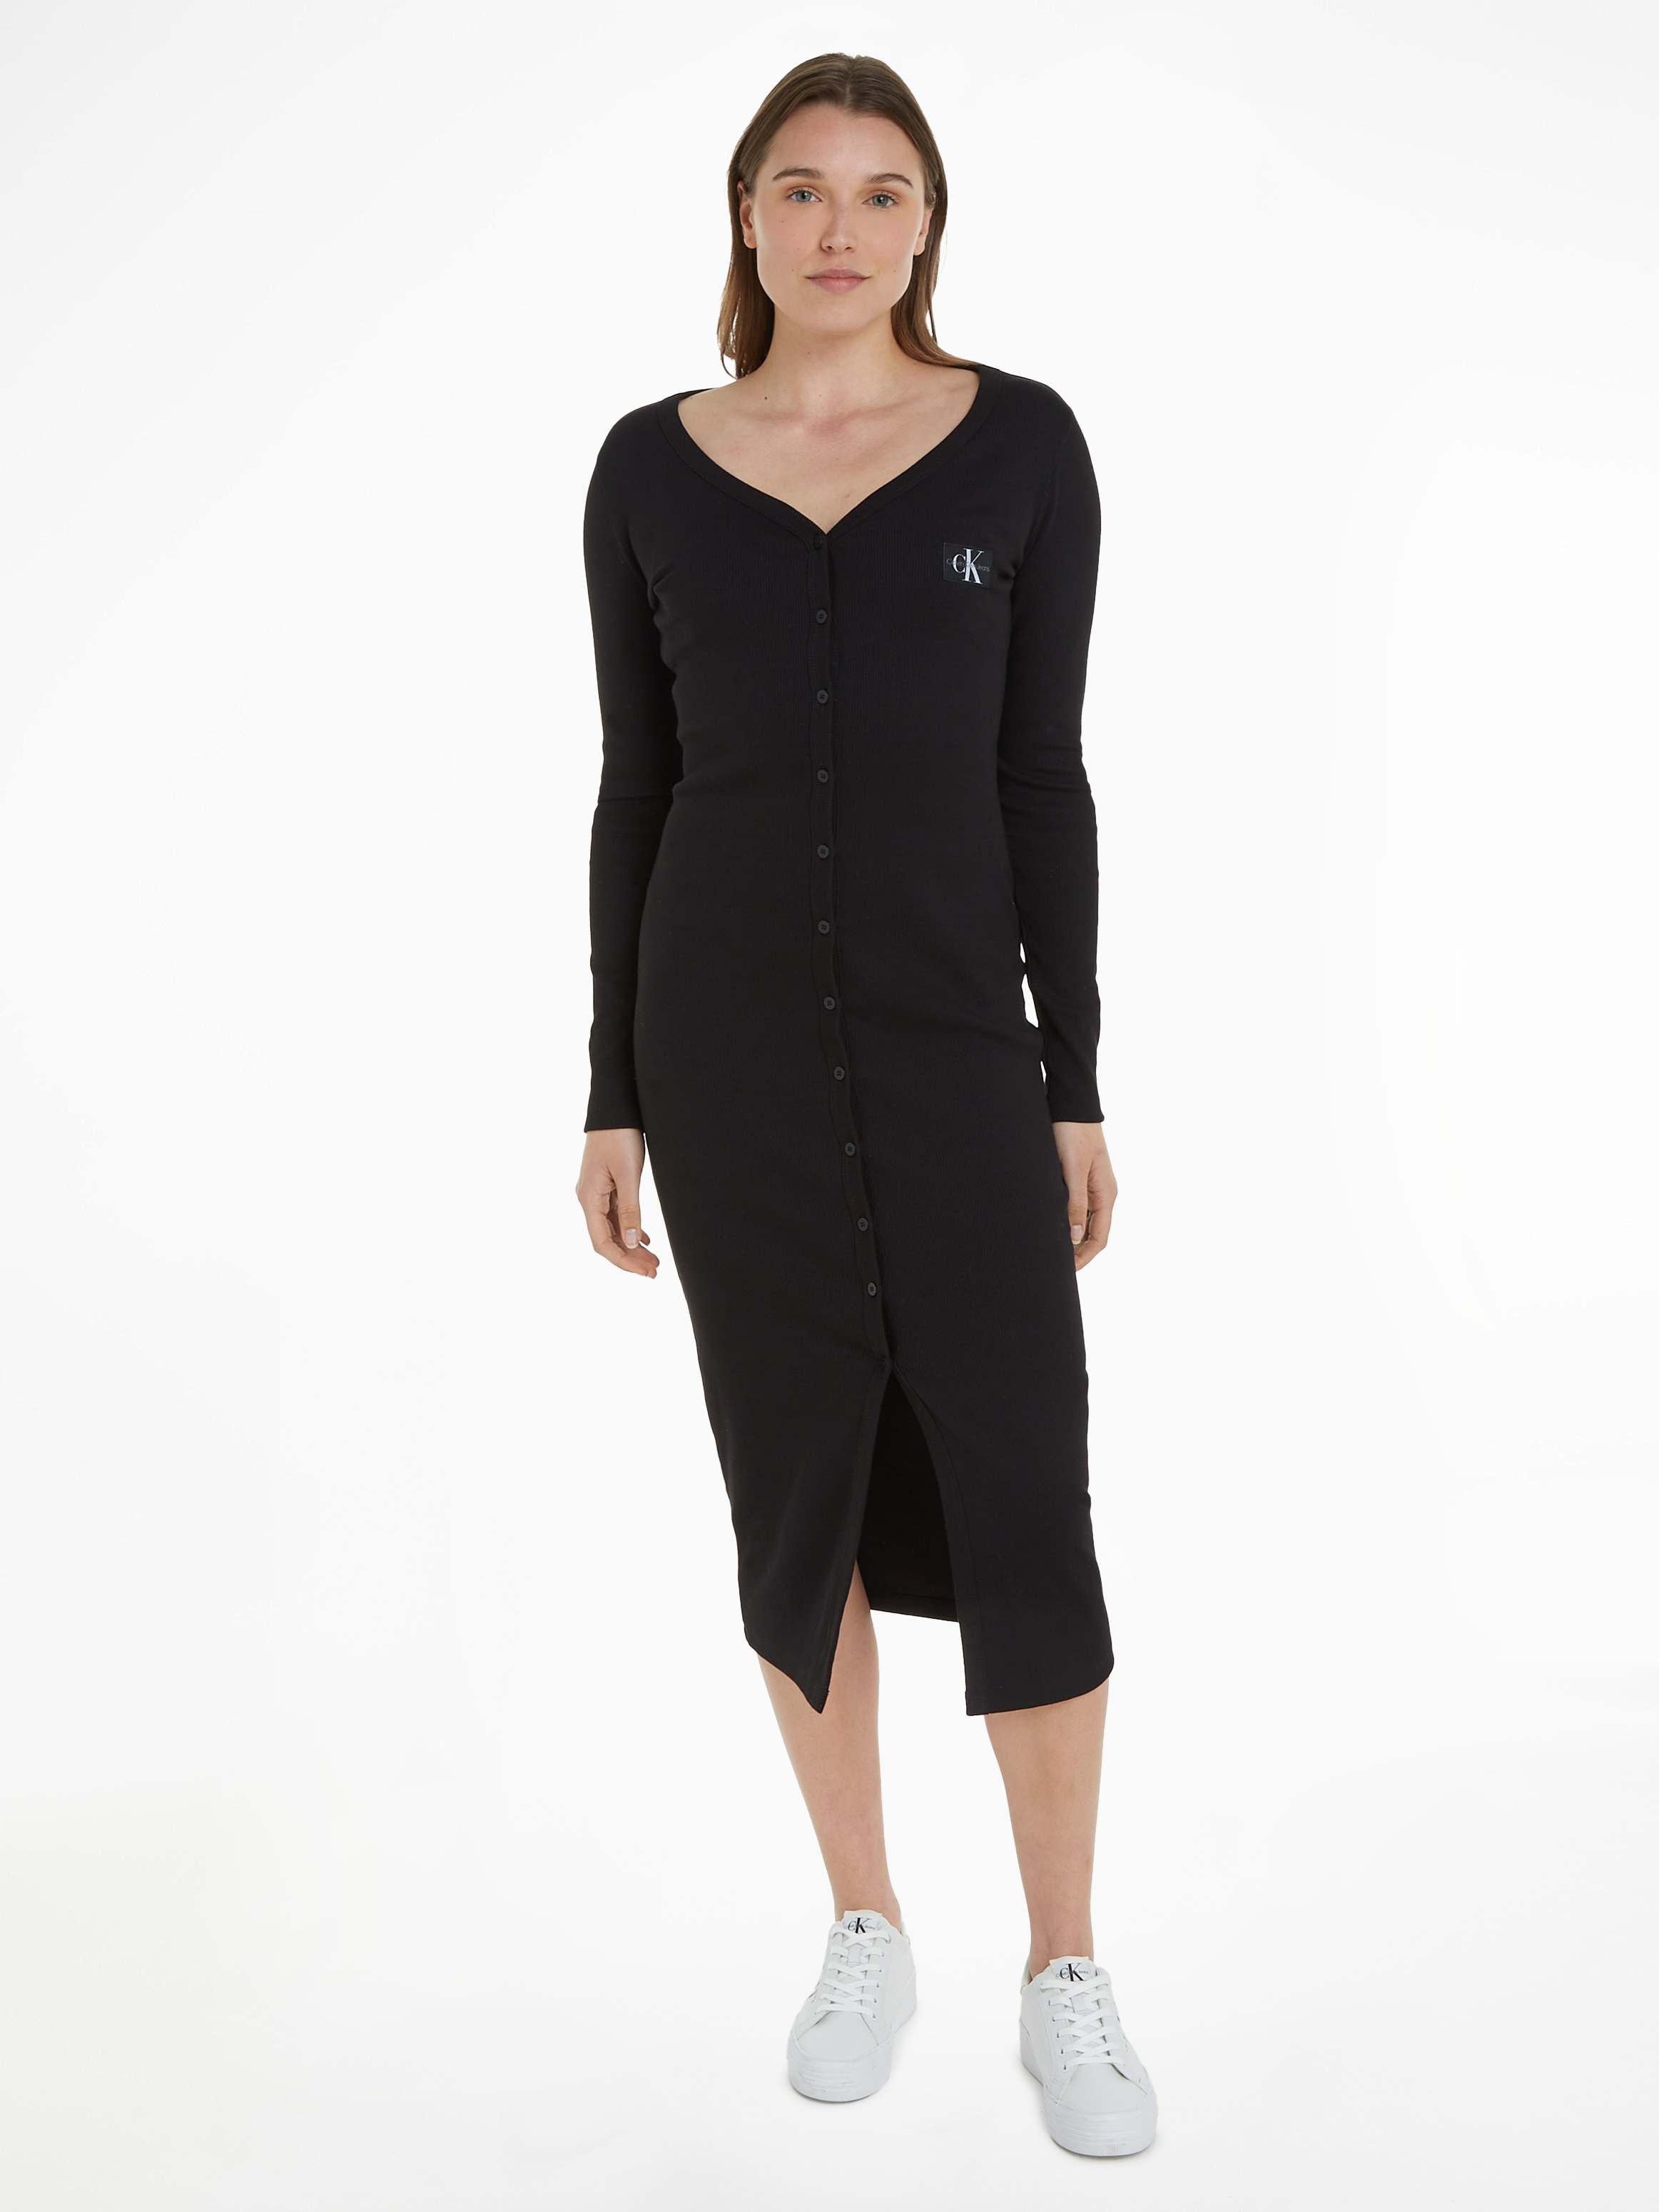 »LABEL Jerseykleid SLEEVE DRESS« bei LONG kaufen RIB OTTO Klein Jeans Calvin